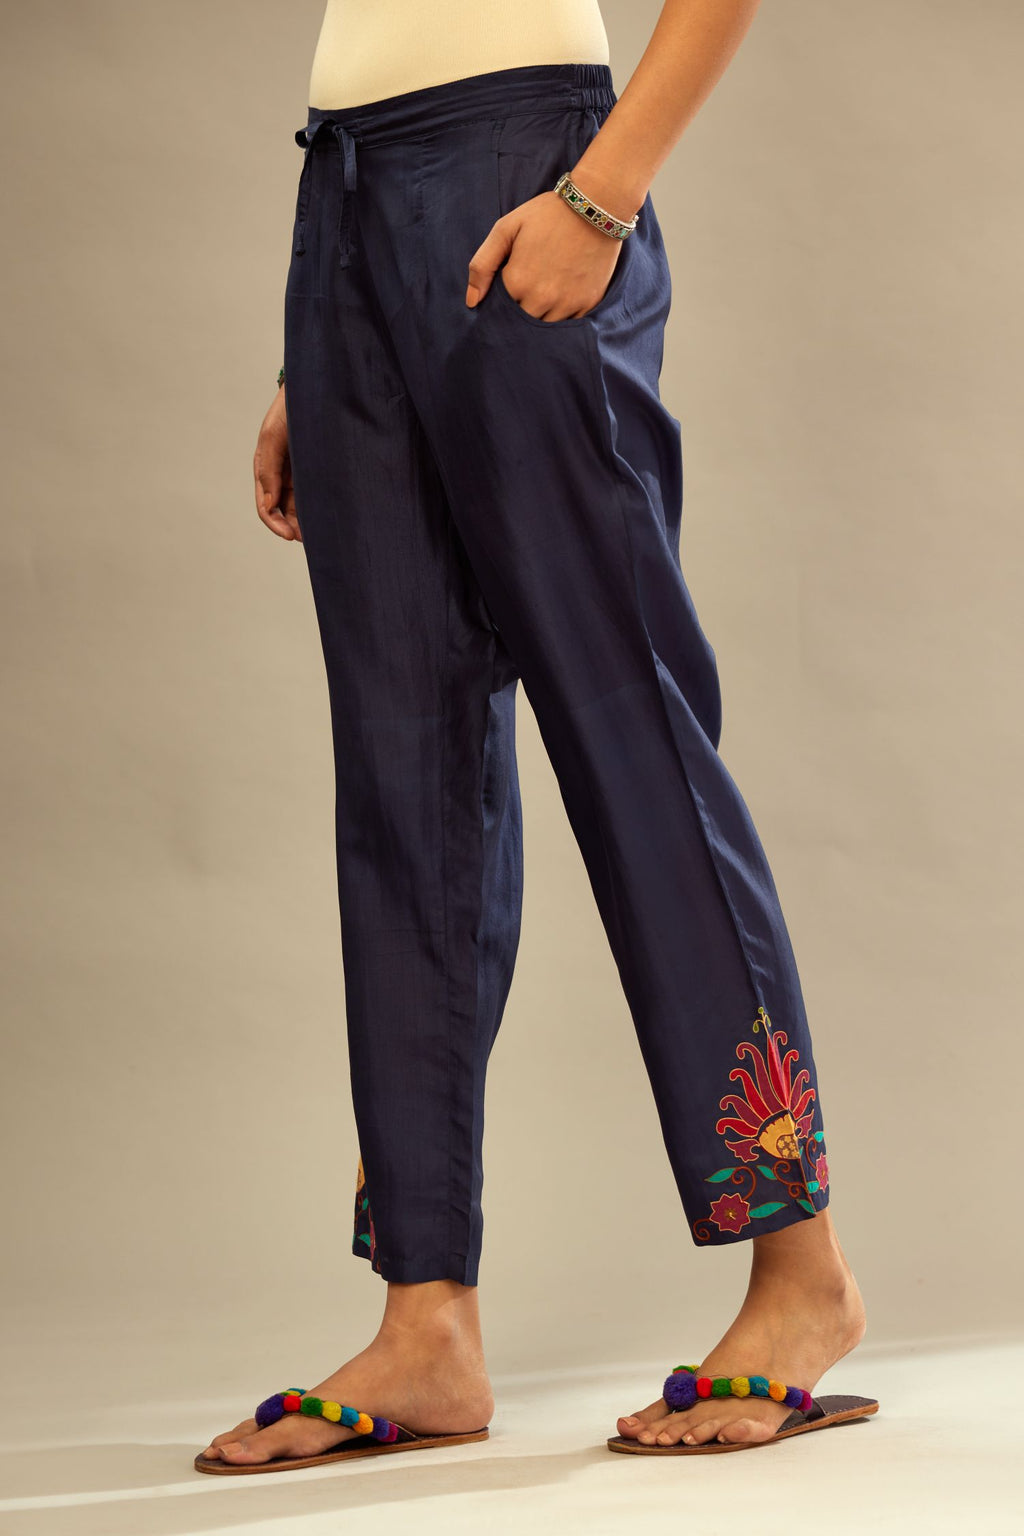 Indigo silk straight pants with multi colored appliqué at hem.